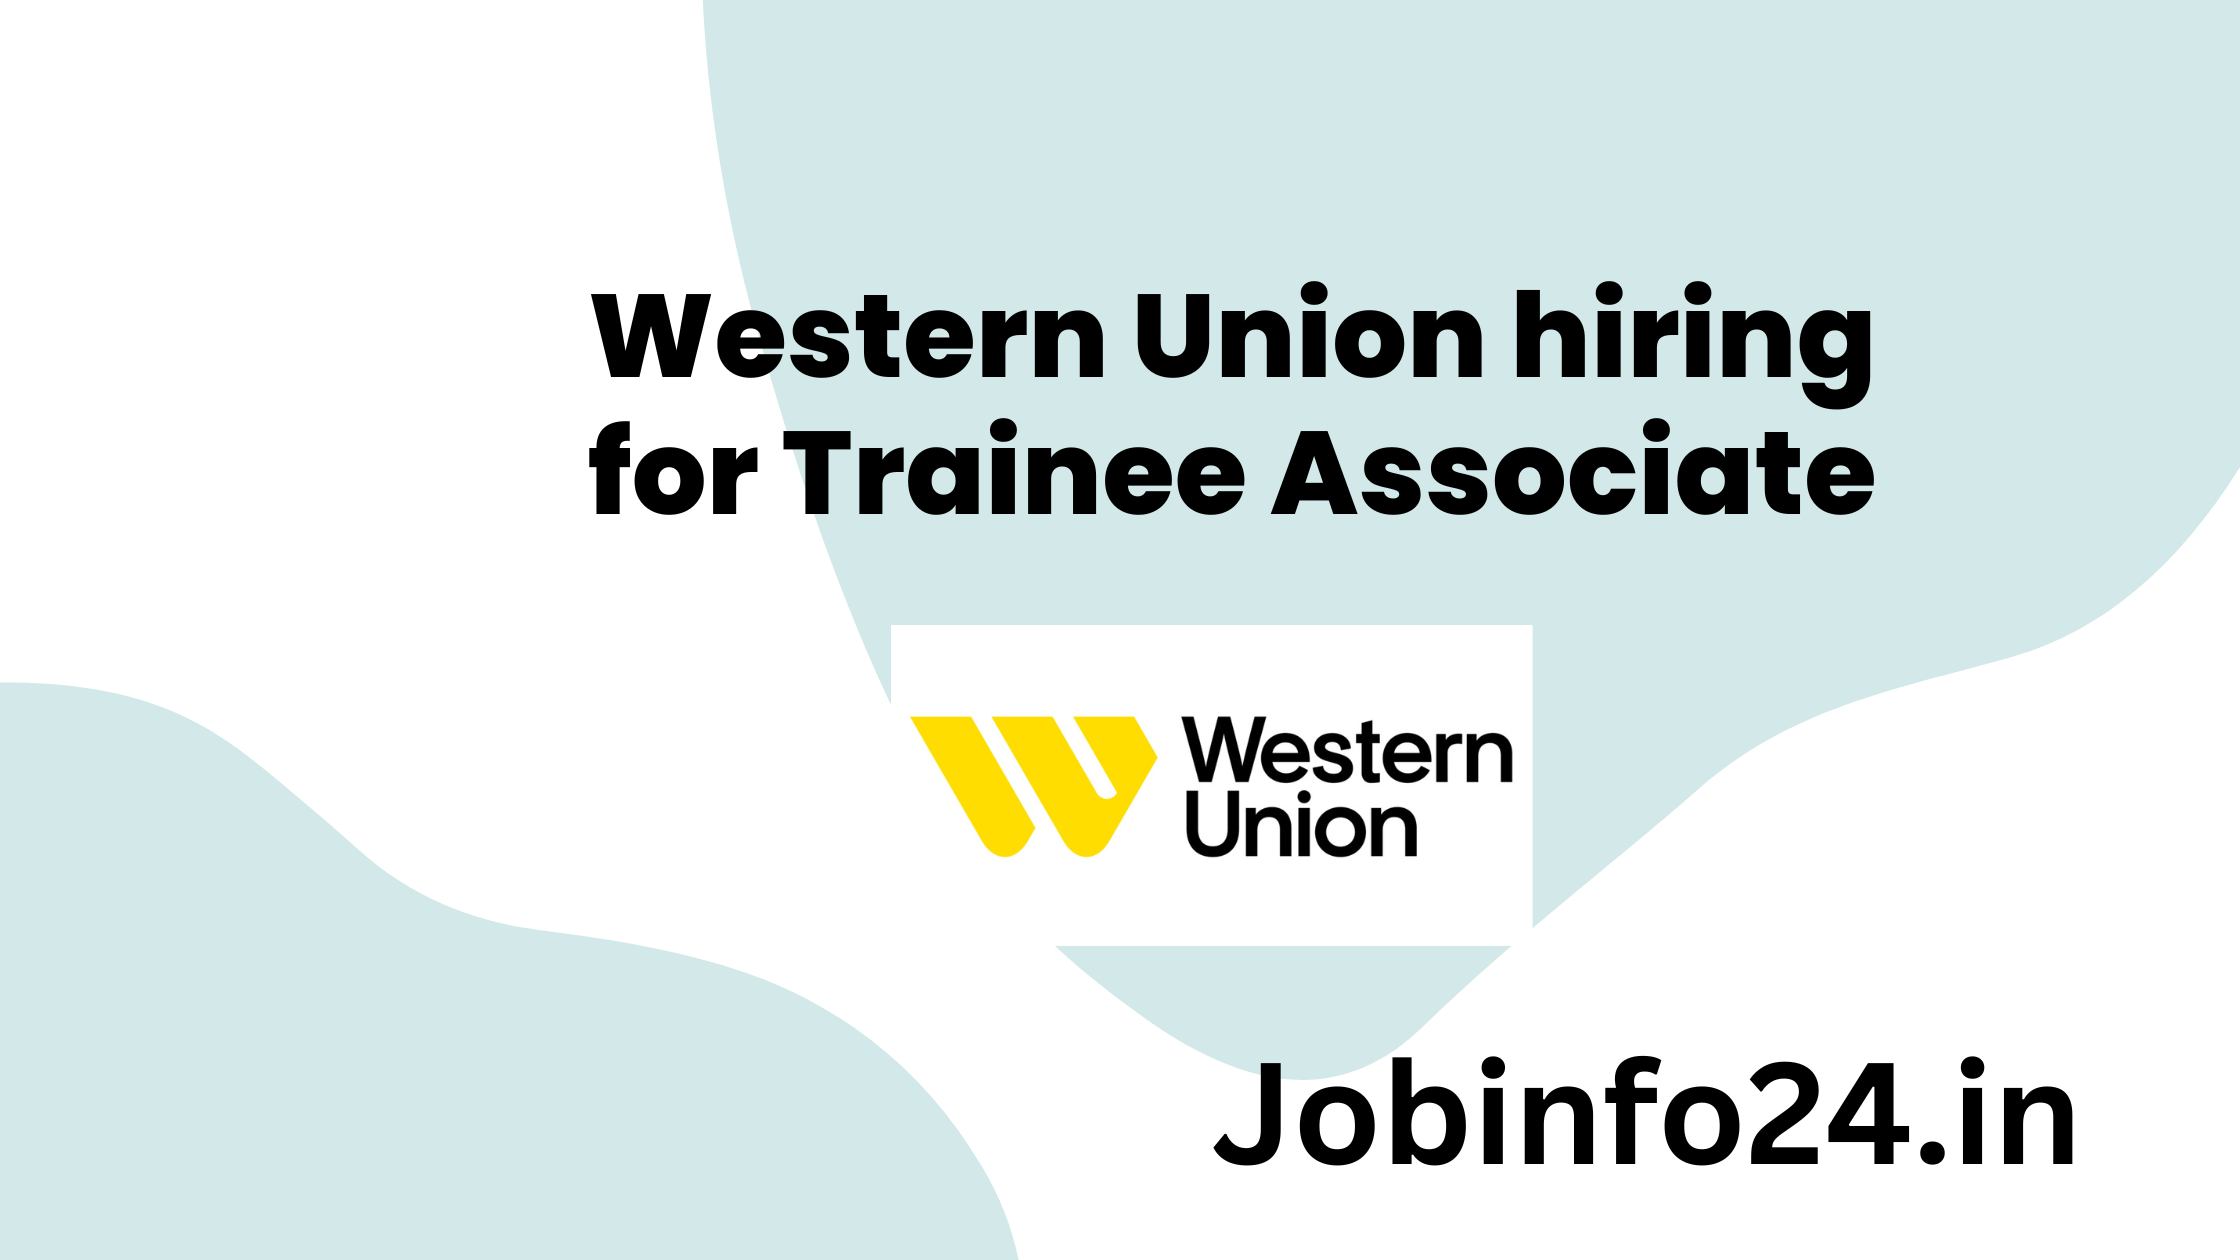 Western Union hiring